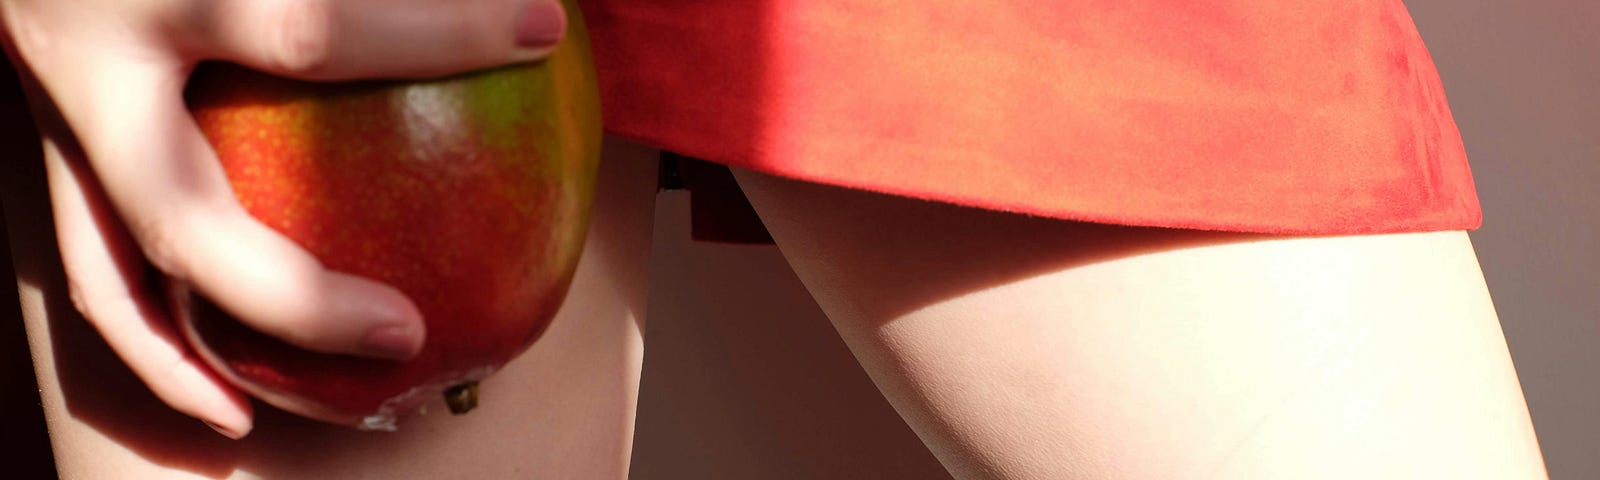 Someone in a reddish skirt is holding a reddish-greenish mango next to a leg.